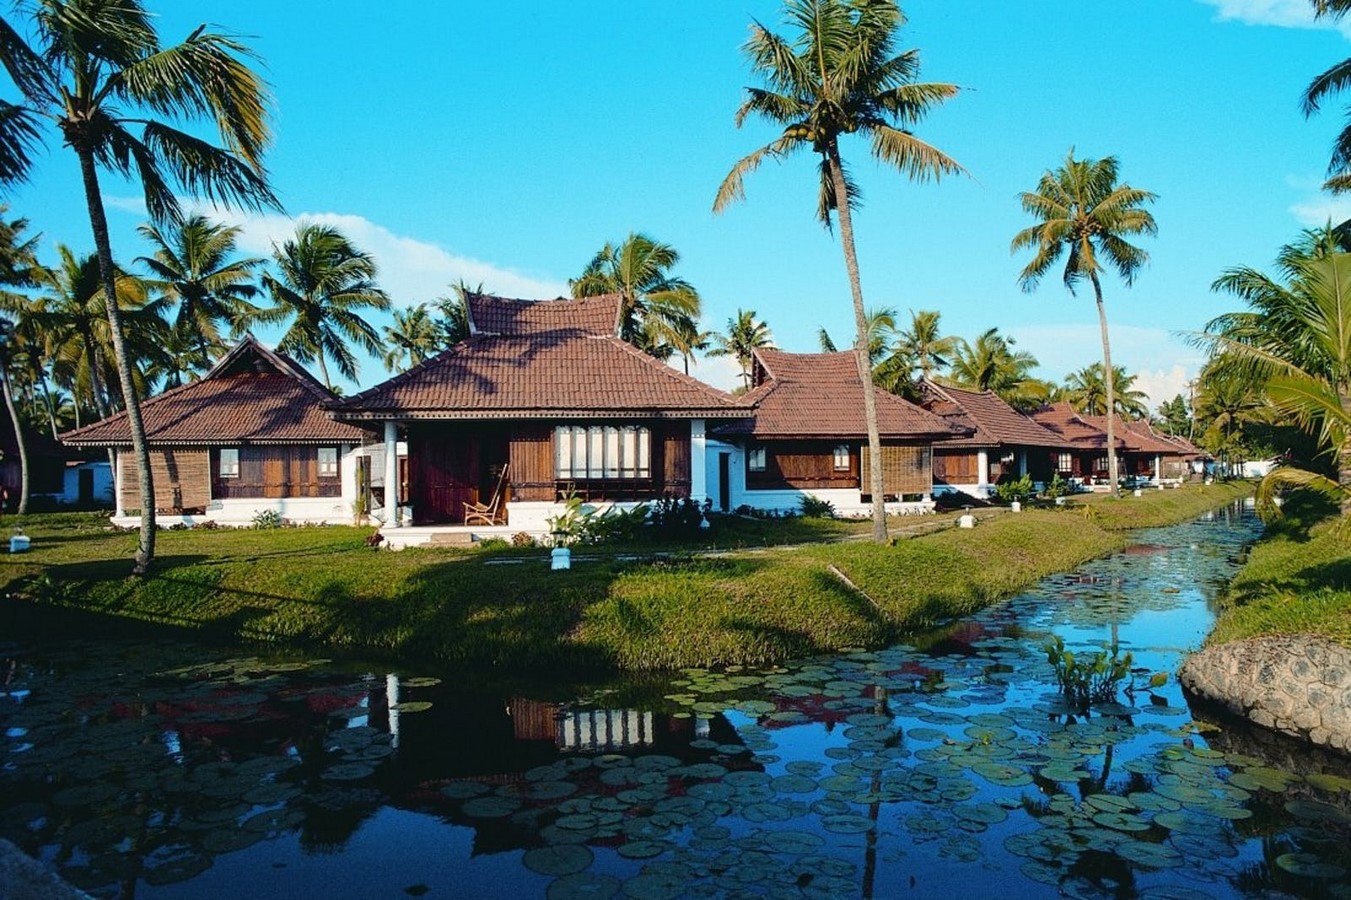 Kumarakom Resort by Morphogenesis: Luxurious and Innovative Resort - Sheet1